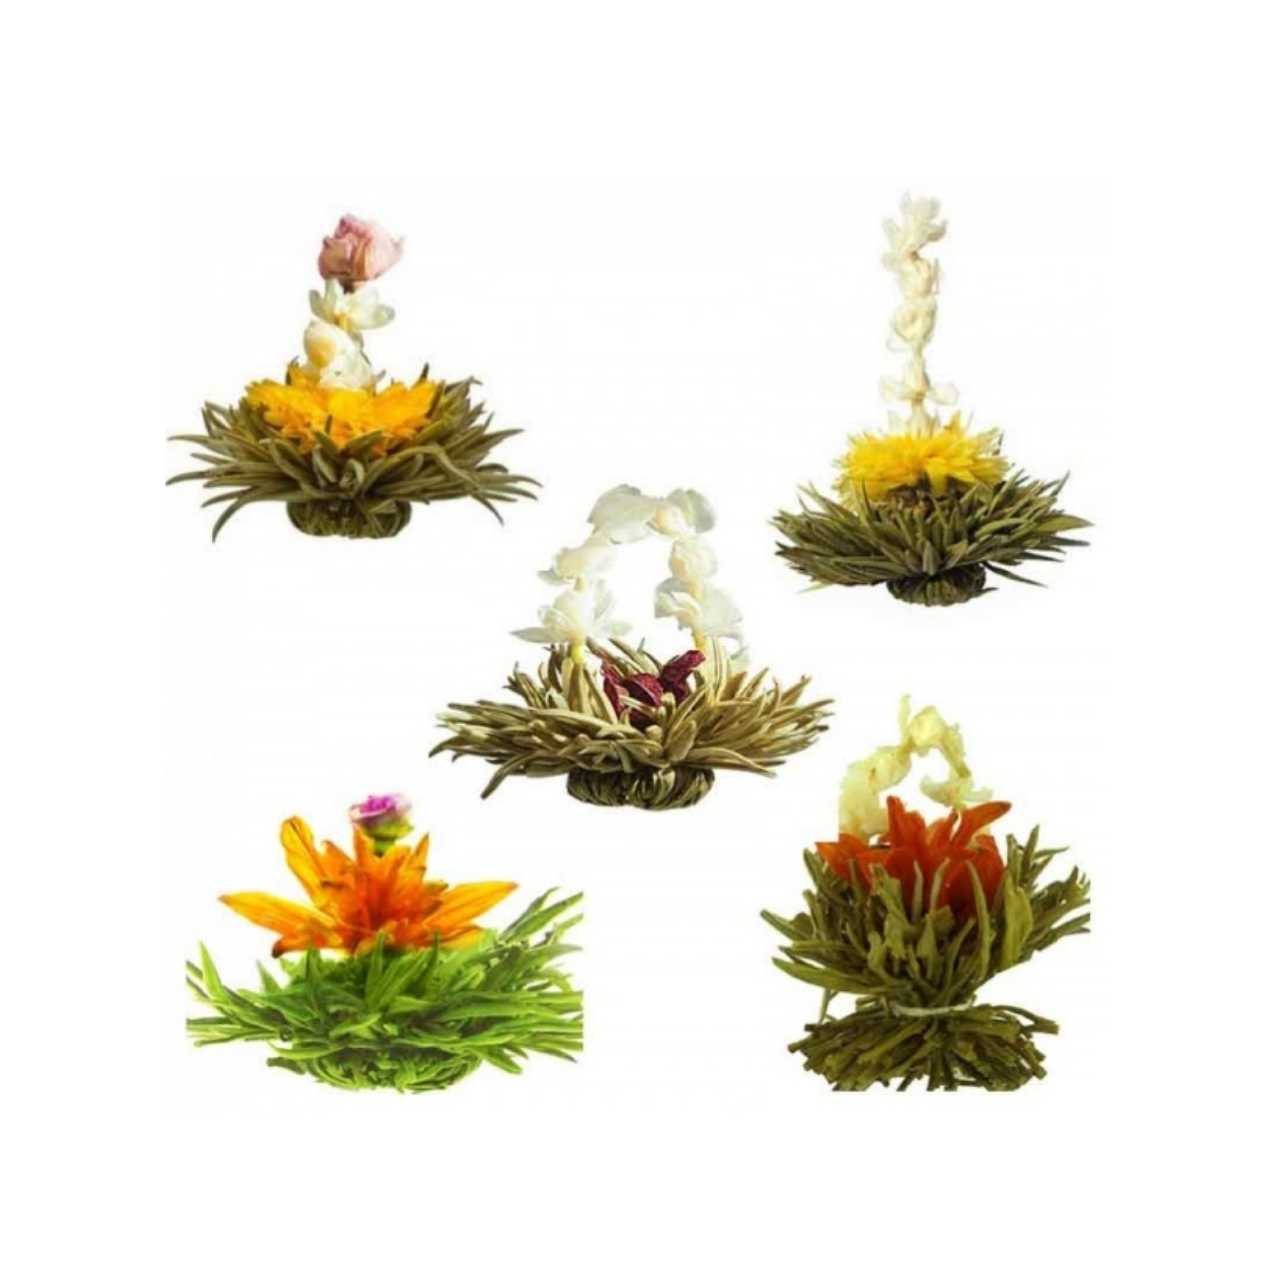 Artisan Flowering Tea Bulbs Gift Set with 10 Bulbs